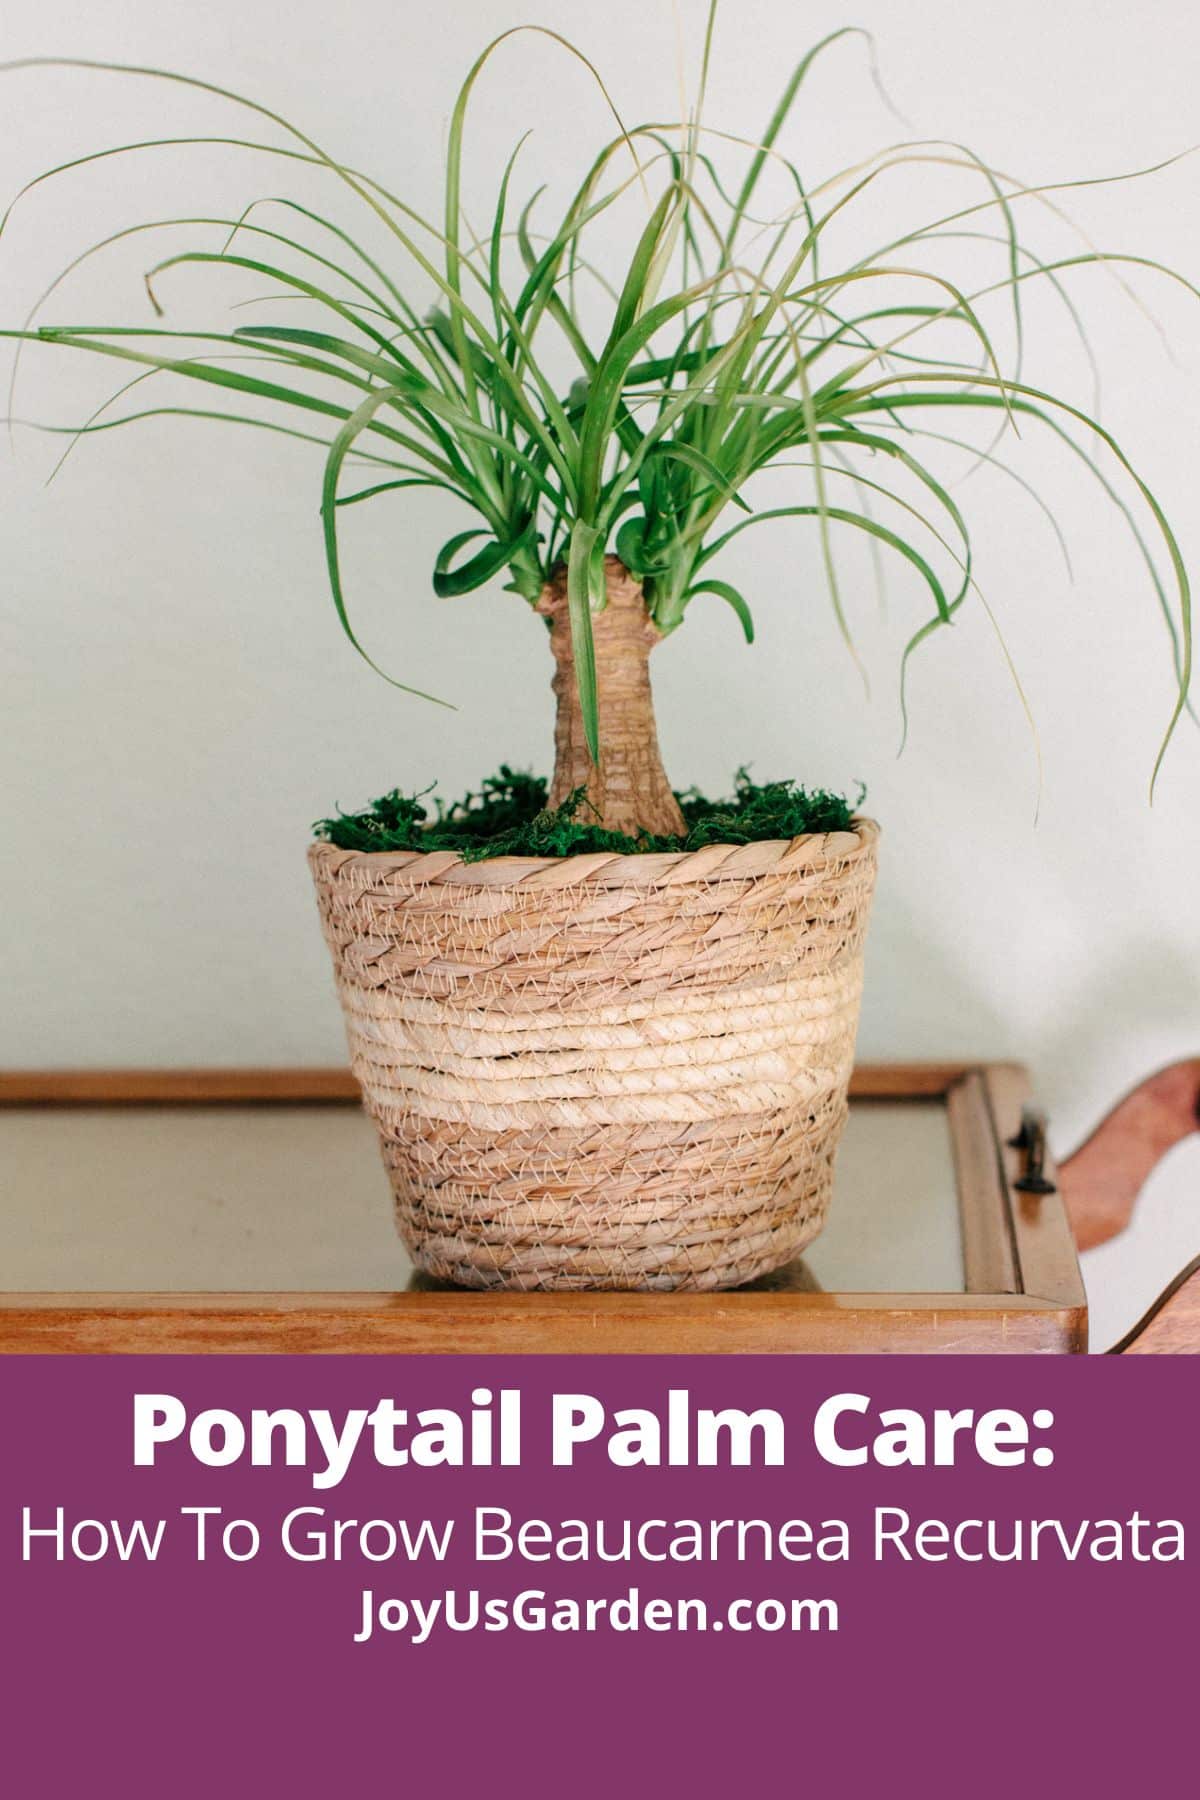 Ponytail palm in plant basket on tea cart text reads Ponytail Palm Care: How To Grow Beaucarnea Recurvata joyusgarden.com